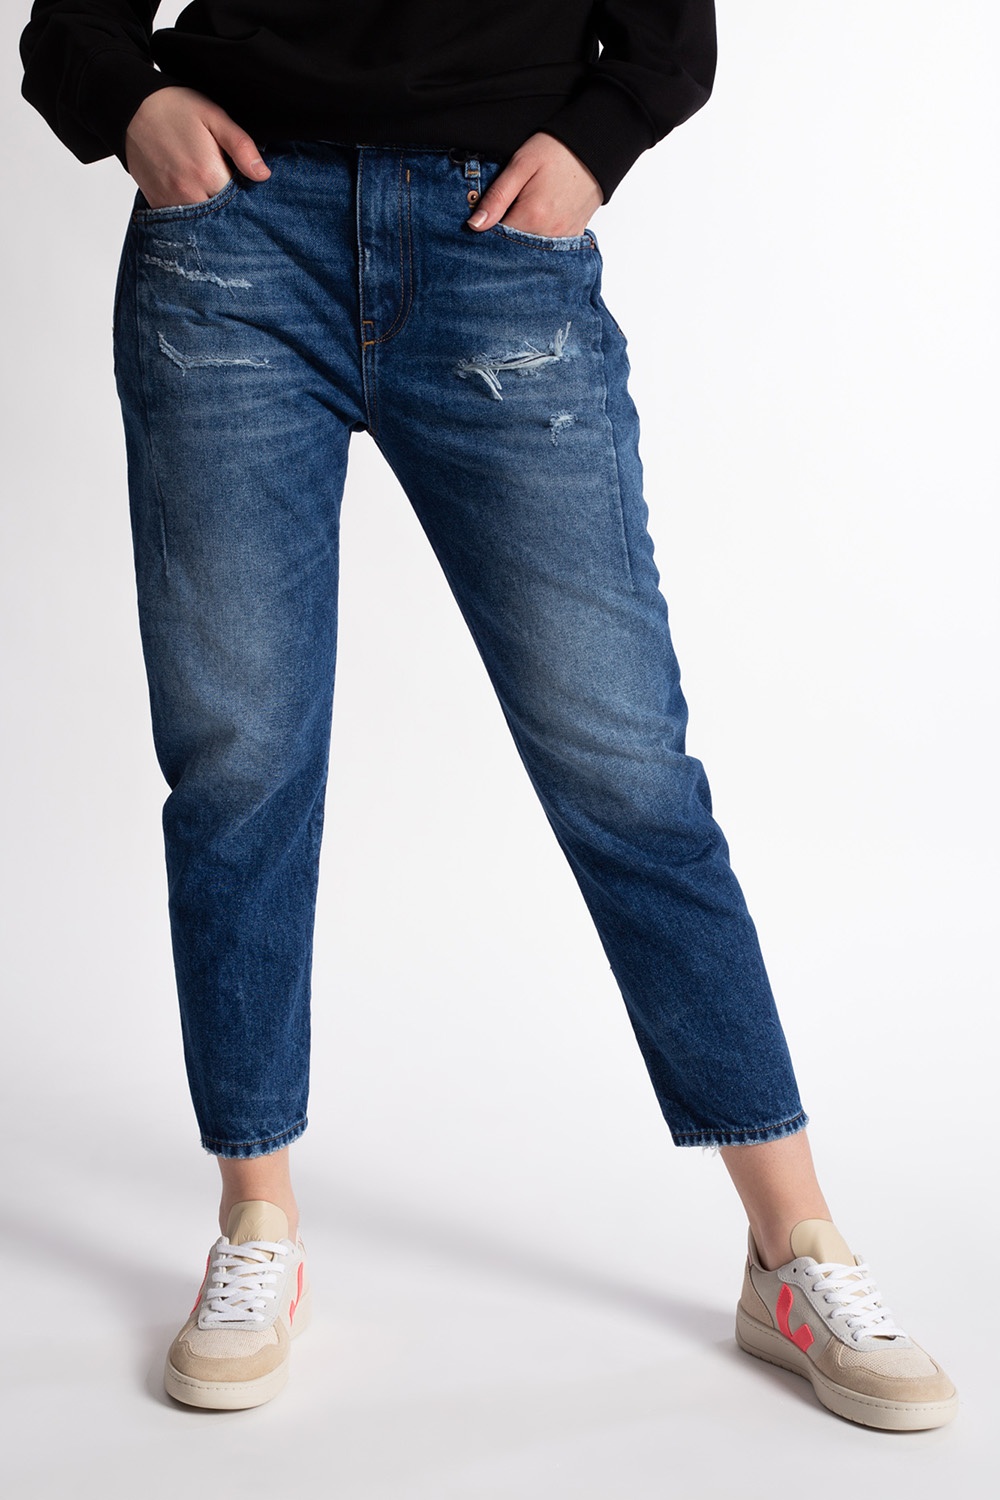 levering Institut veteran IetpShops - Diesel 'D - Women's Clothing | Fayza' jeans with raw edge |  wrap tie dress Blau